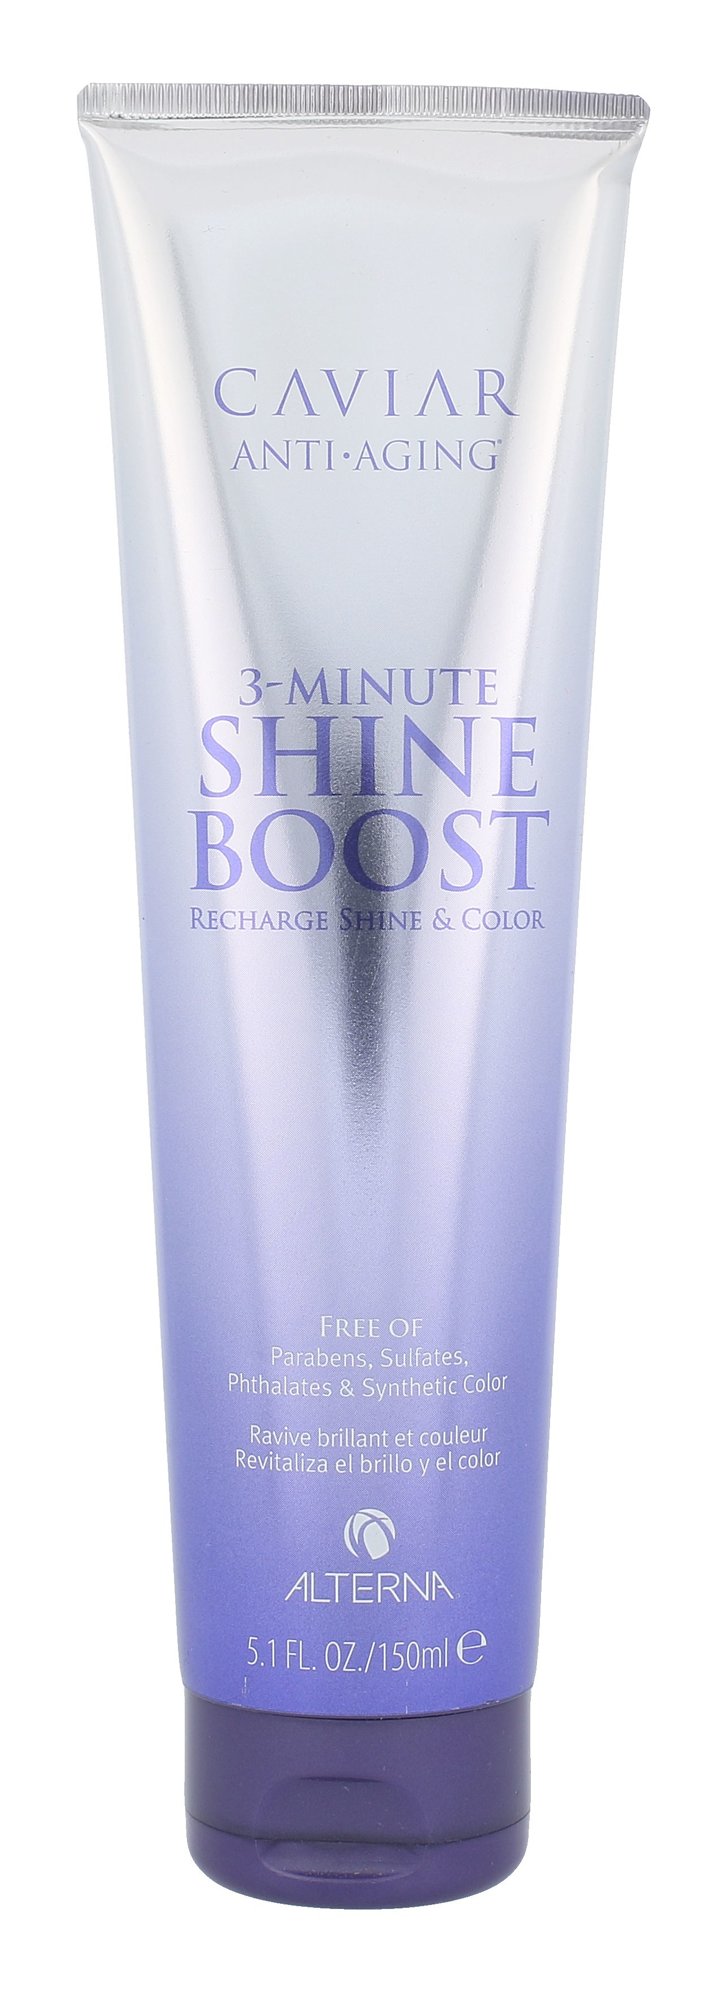 Alterna 3-Minute Shine Boost